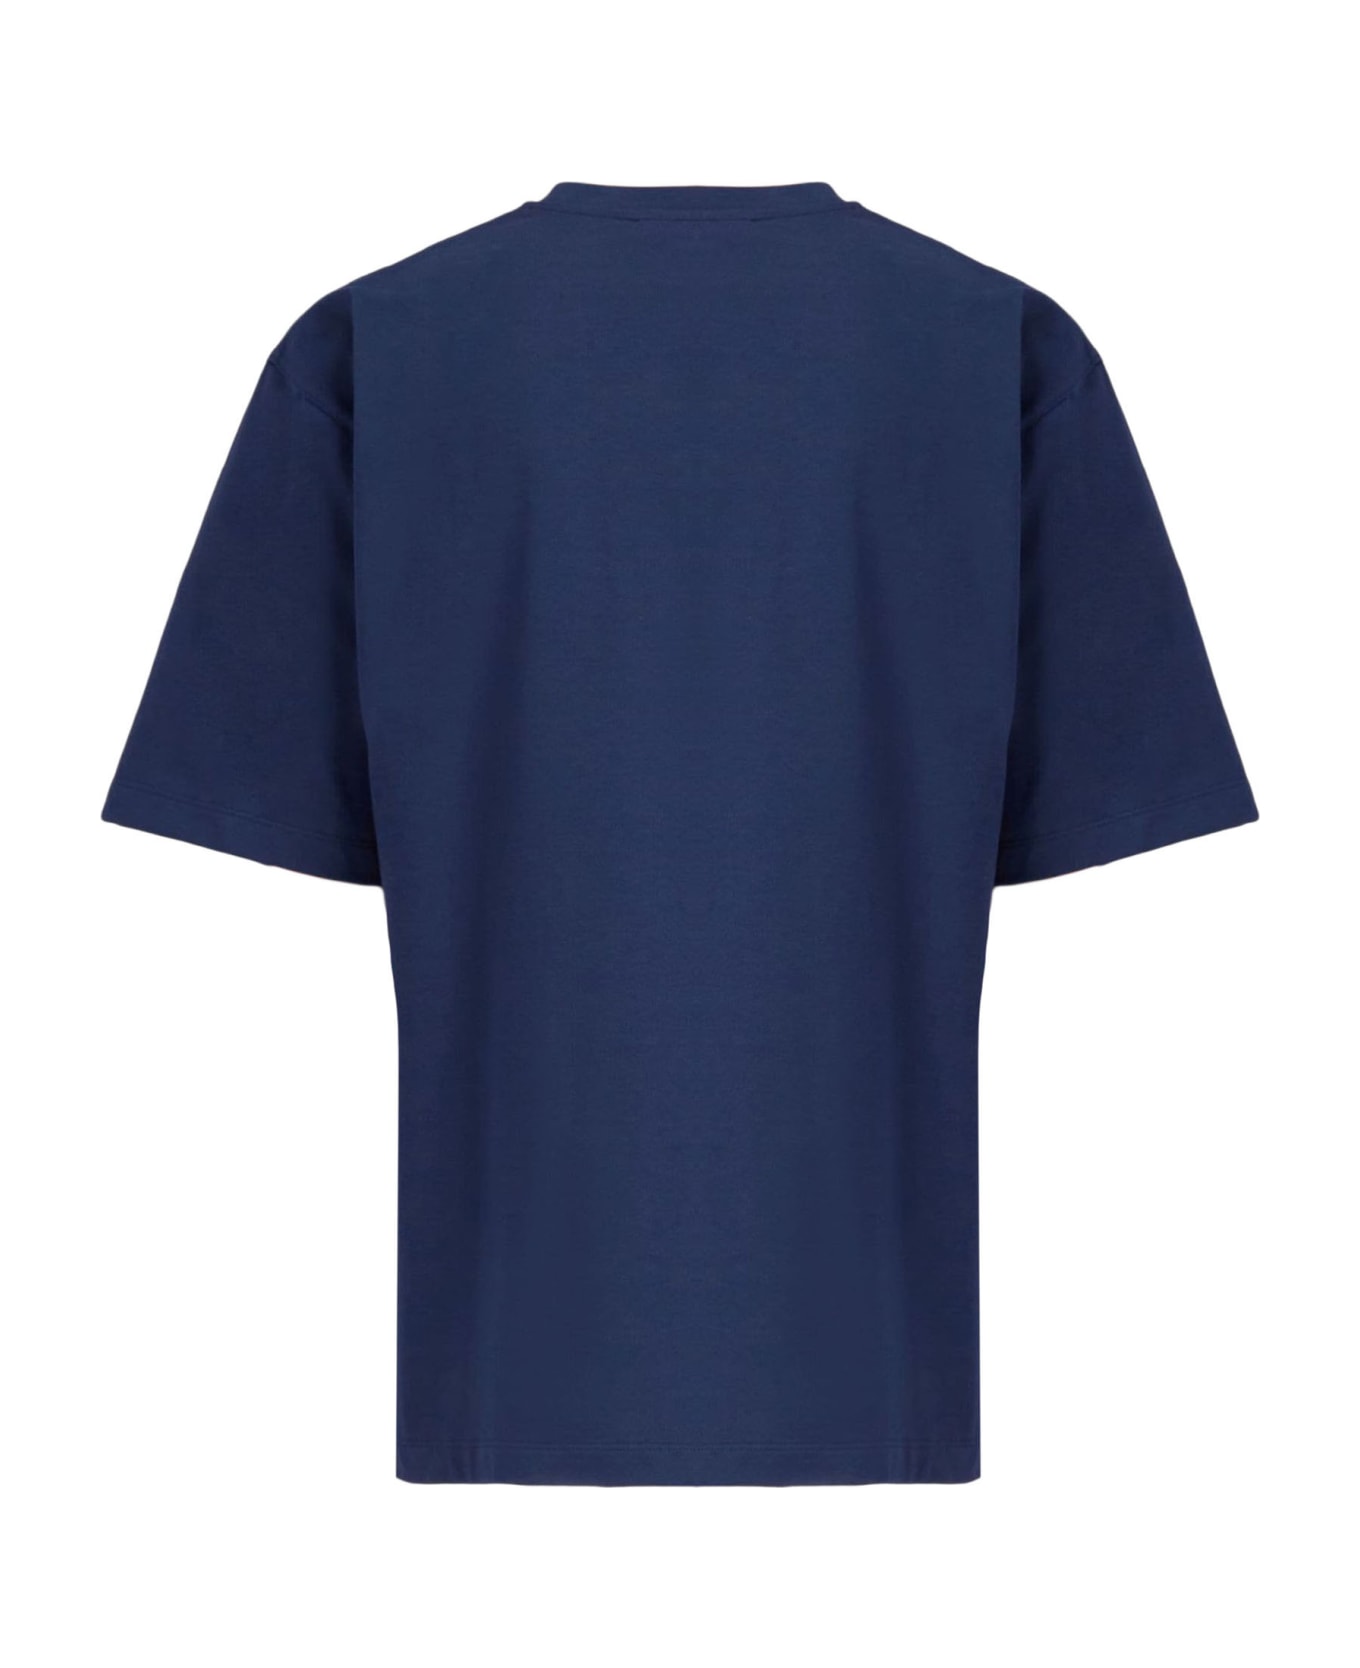 Marni Navy Blue Cotton T-shirt - Blue シャツ